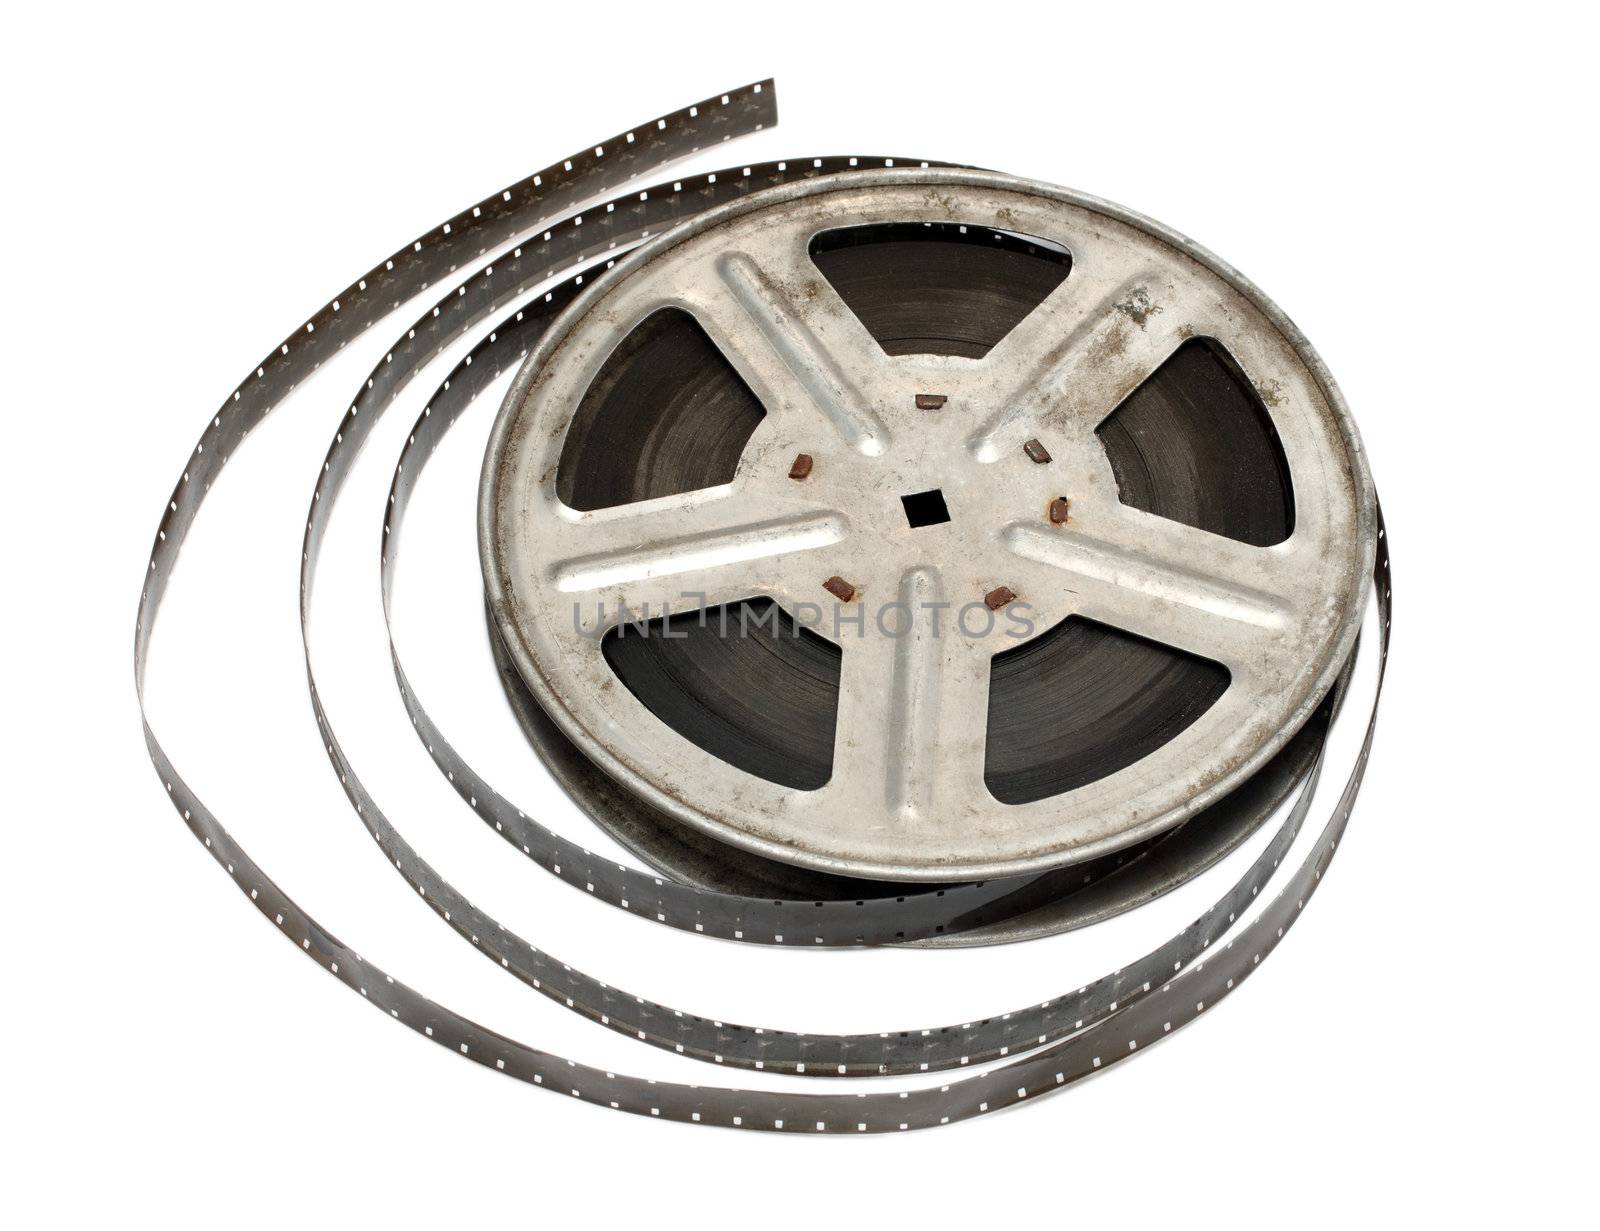 old movie film on metal reel isolated on white